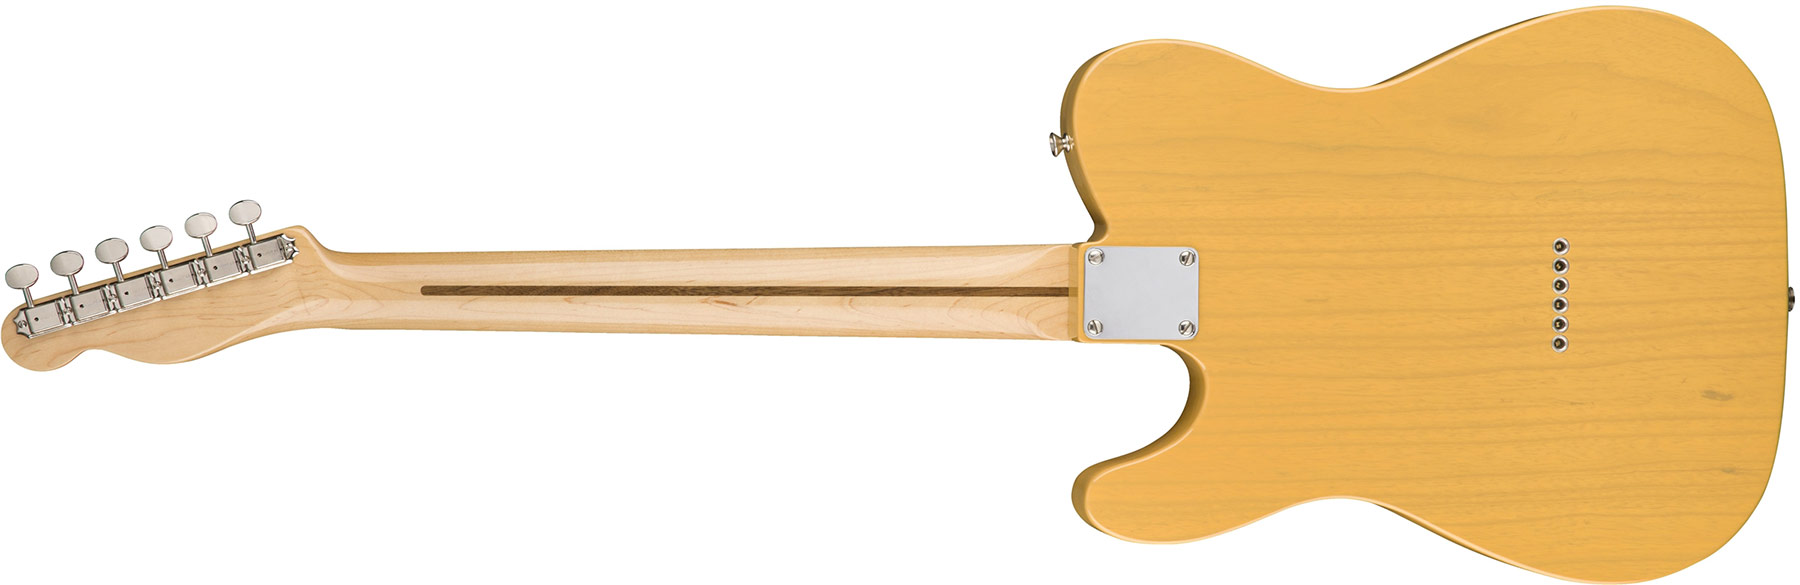 Fender Tele '50s American Original Usa Mn - Butterscotch Blonde - E-Gitarre in Teleform - Variation 3